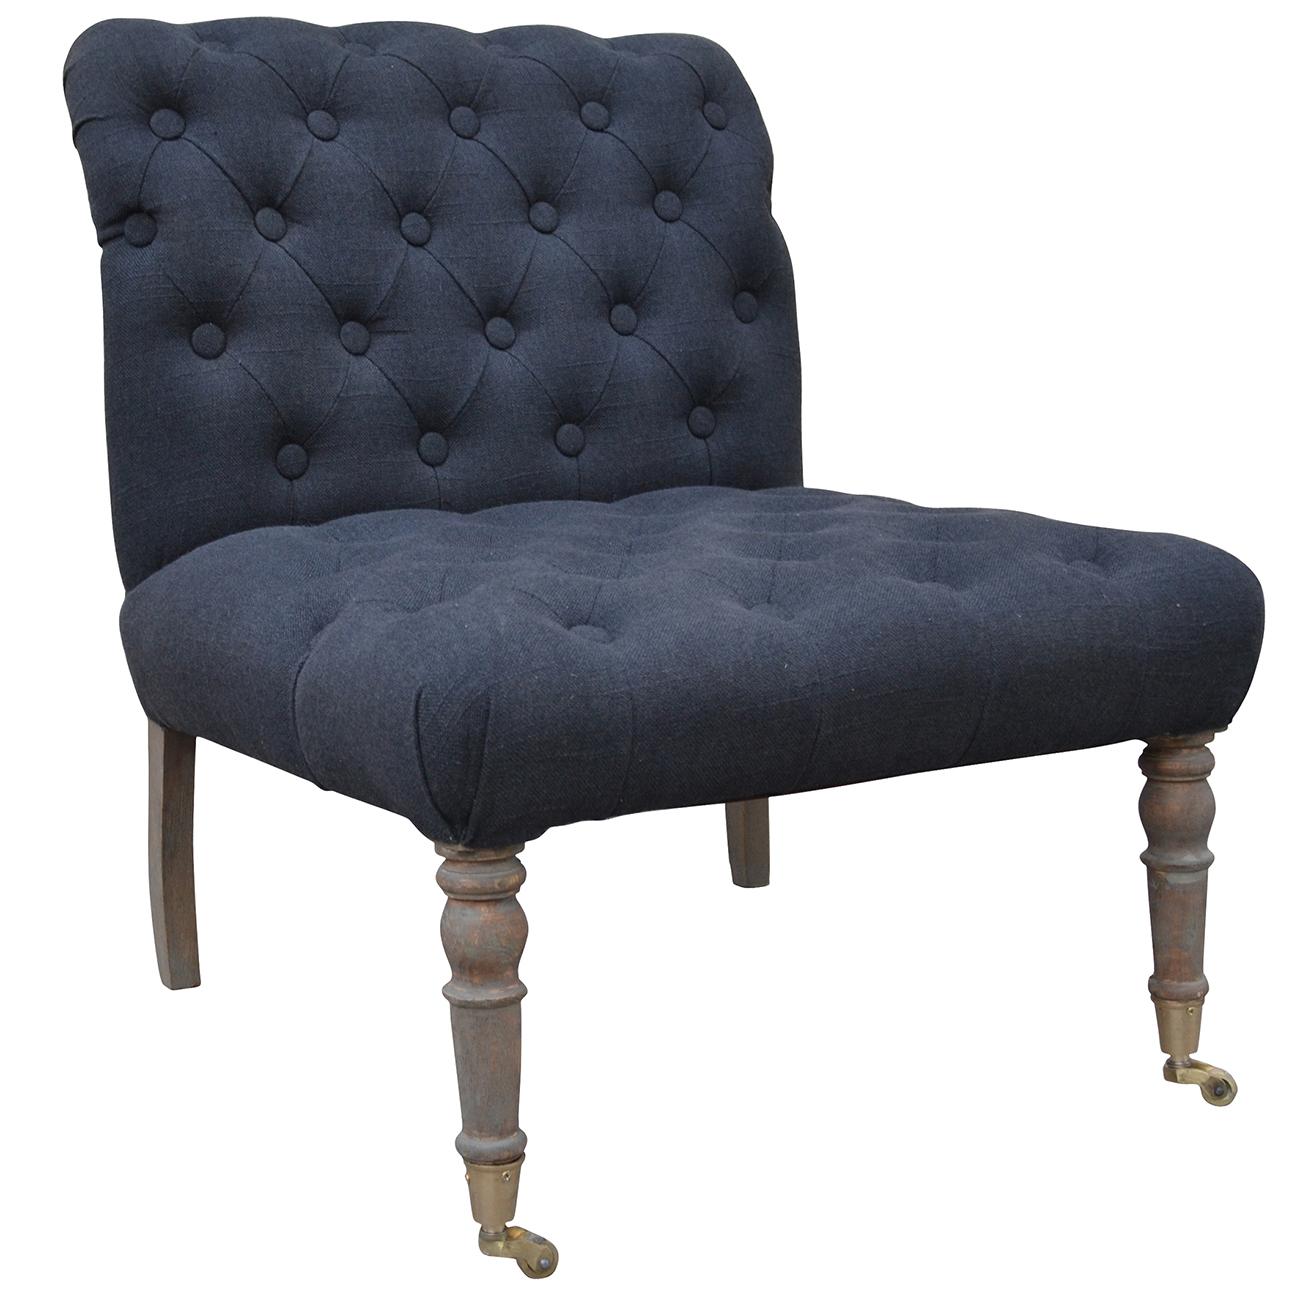 Traditional Accent Chair AV41050 AV41050-Accent Chair-Set-2 in Black Fabric